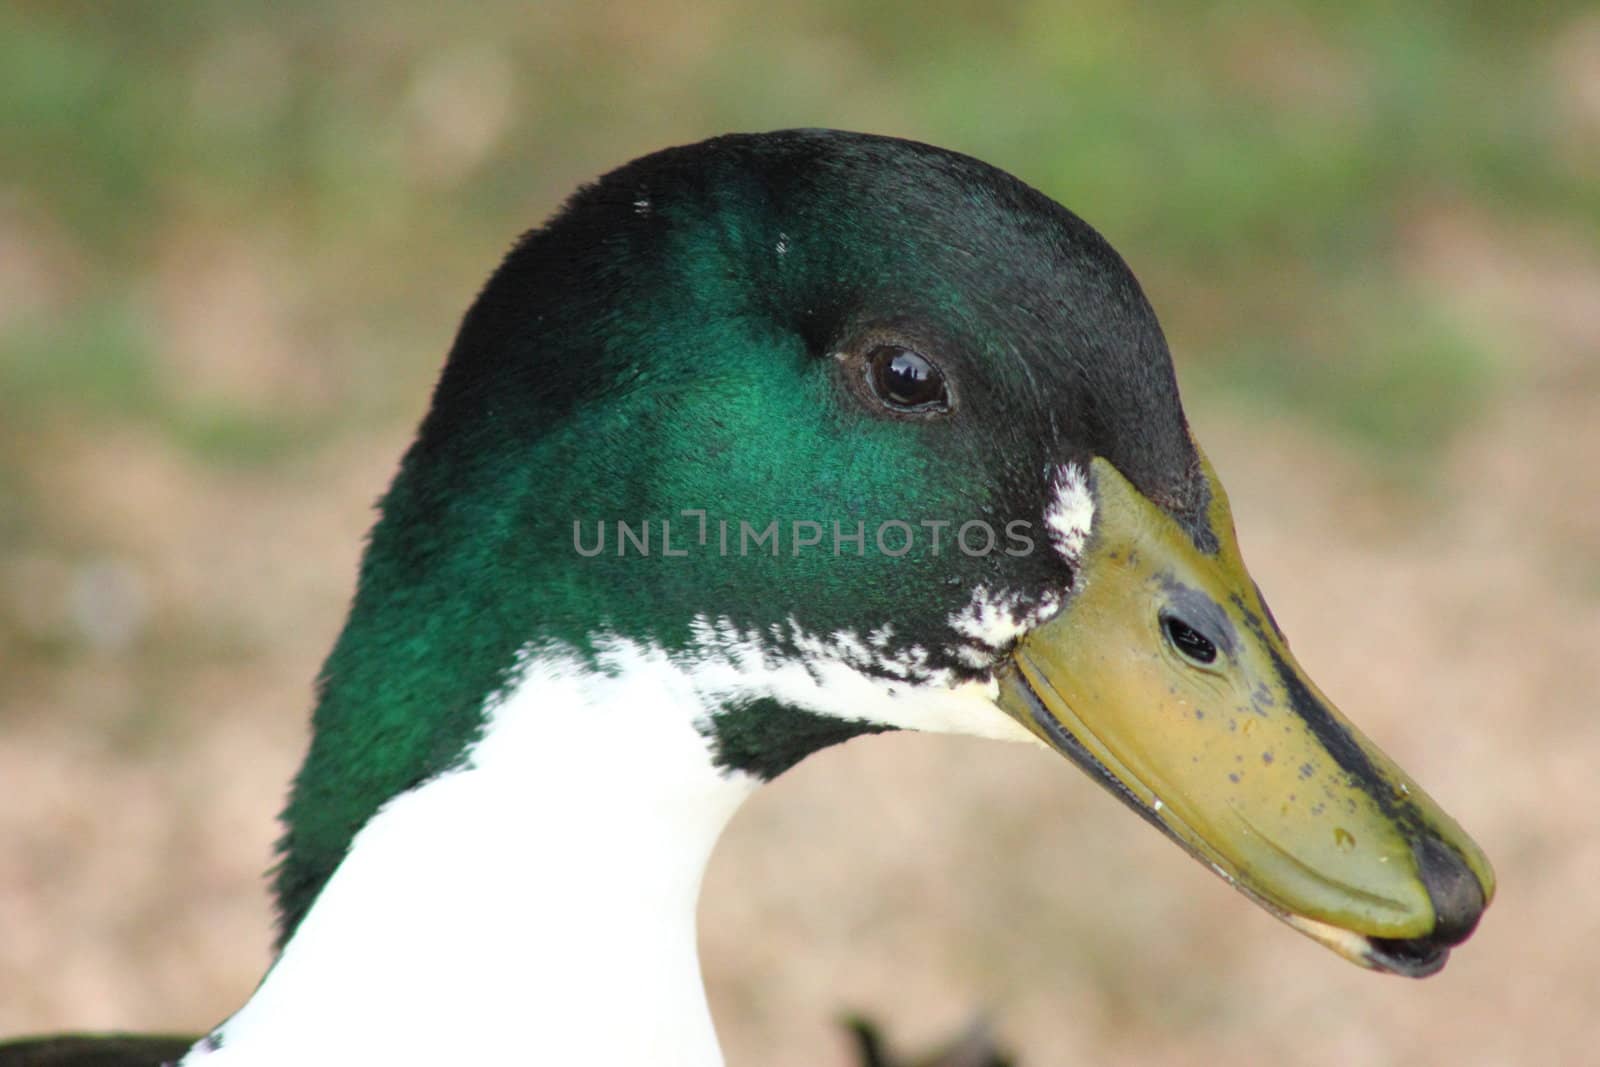 Closeup of a mallard duck with green head.